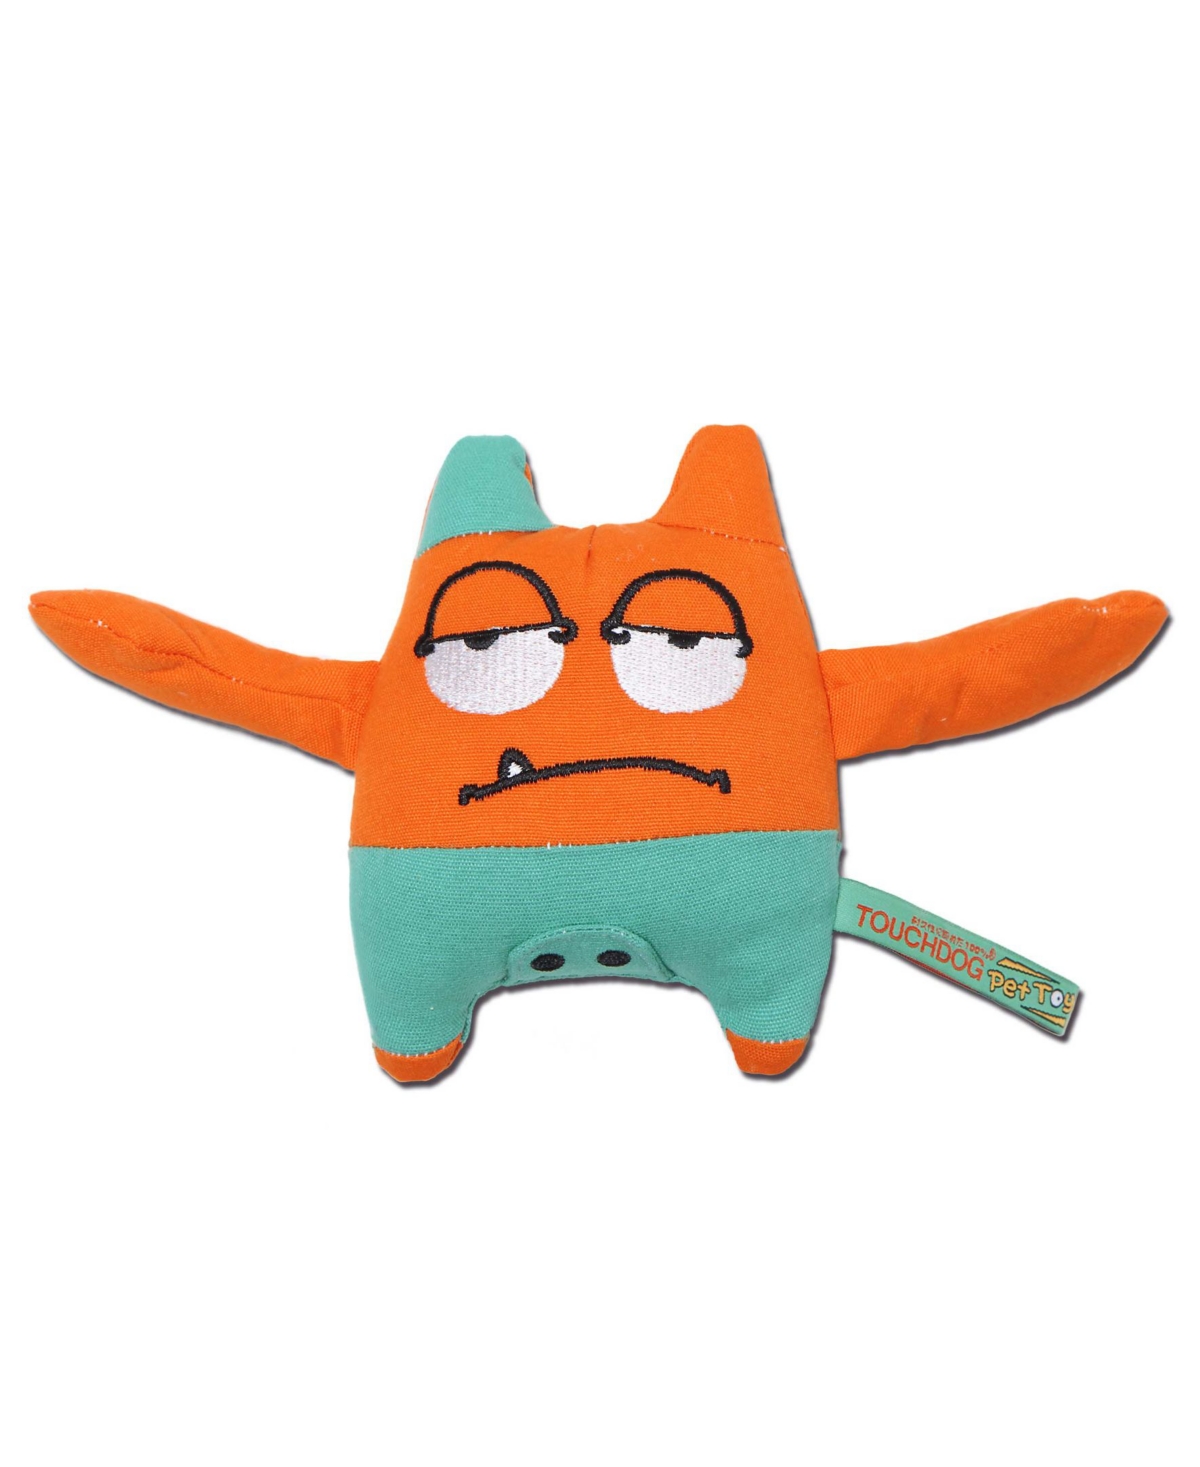 Cartoon Sleepy Monster Plush Dog Toy - Orange